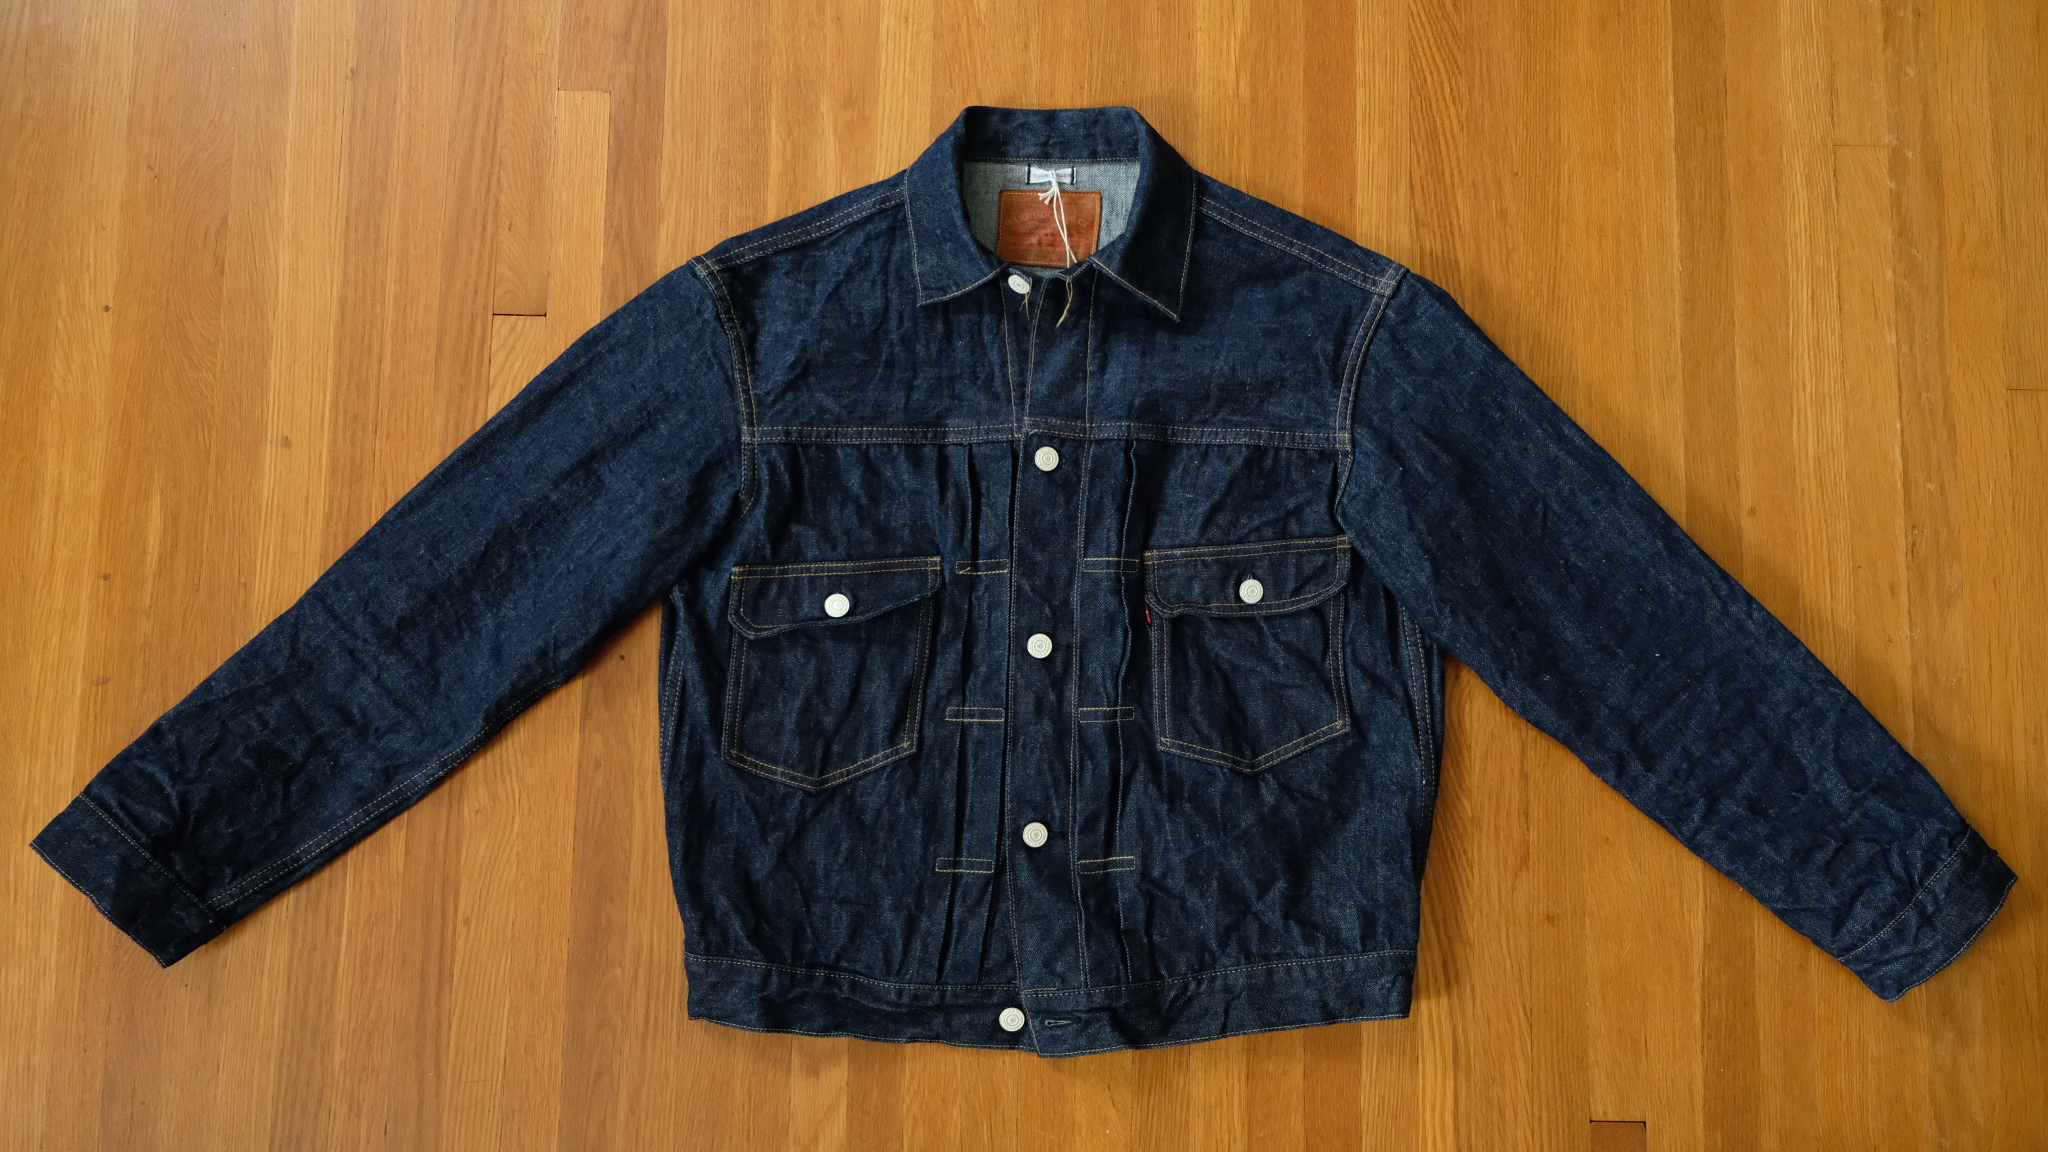 fs: Sugar Cane, Warehouse Co. Type II denim jackets | The Fedora